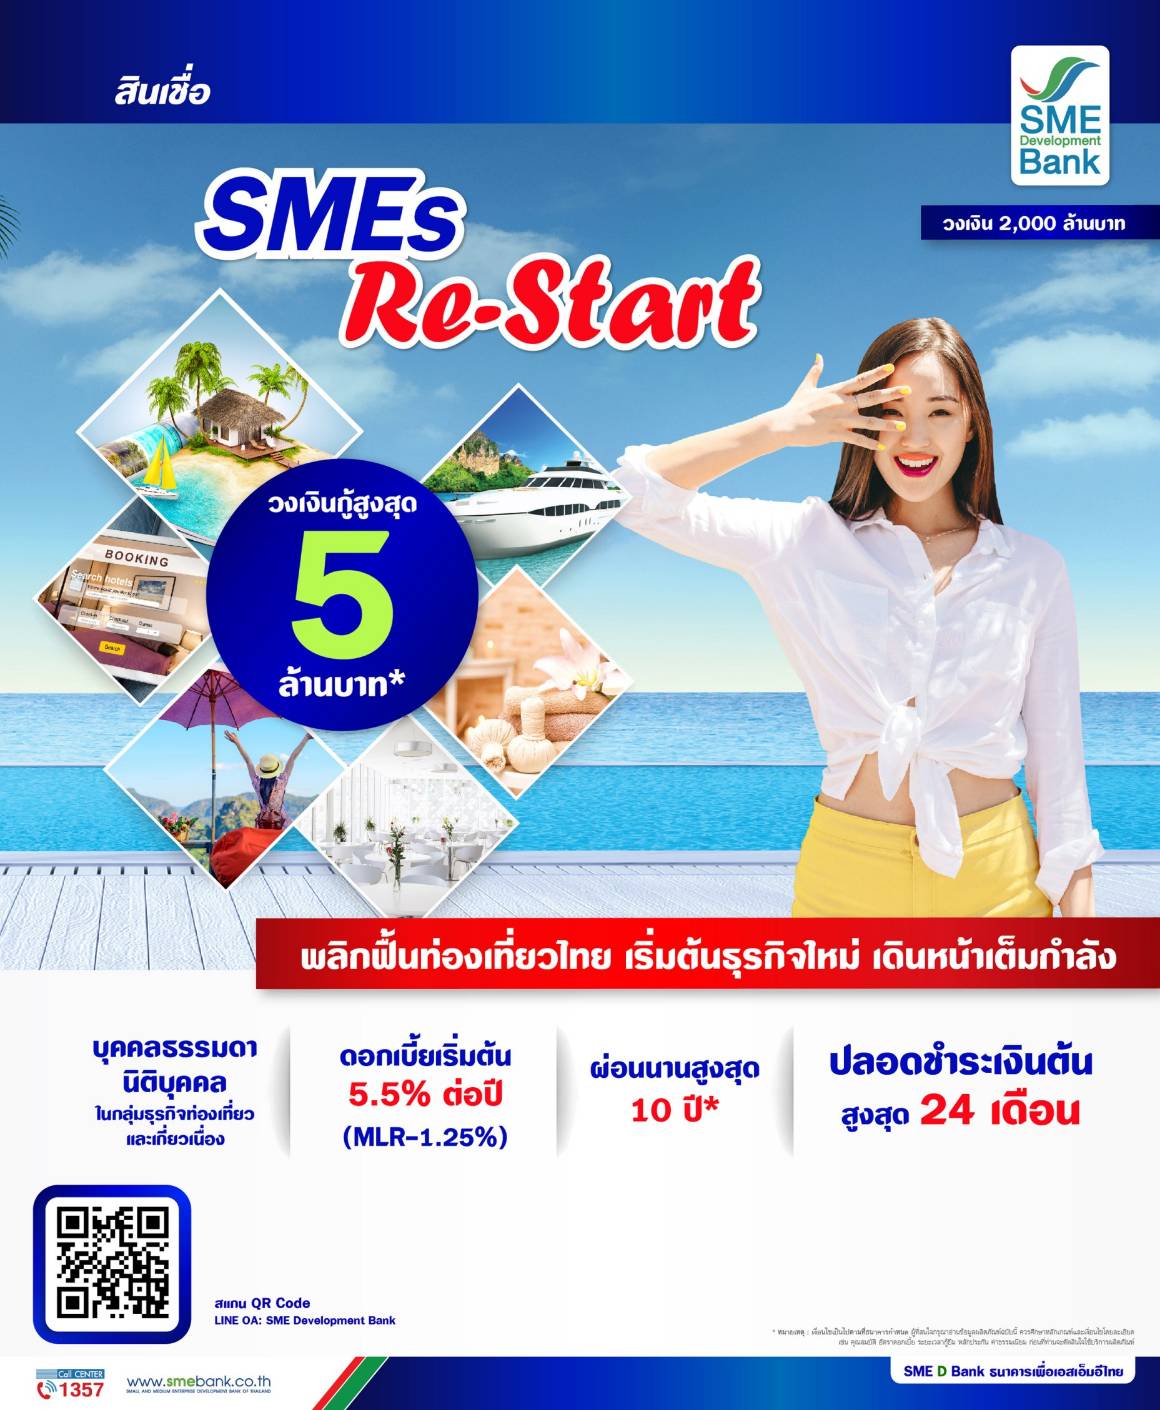 Sme D Bank เปิดตัวสินเชื่อใหม่ 'Smes Re-Start'  สนับสนุนผู้ประกอบการธุรกิจท่องเที่ยว